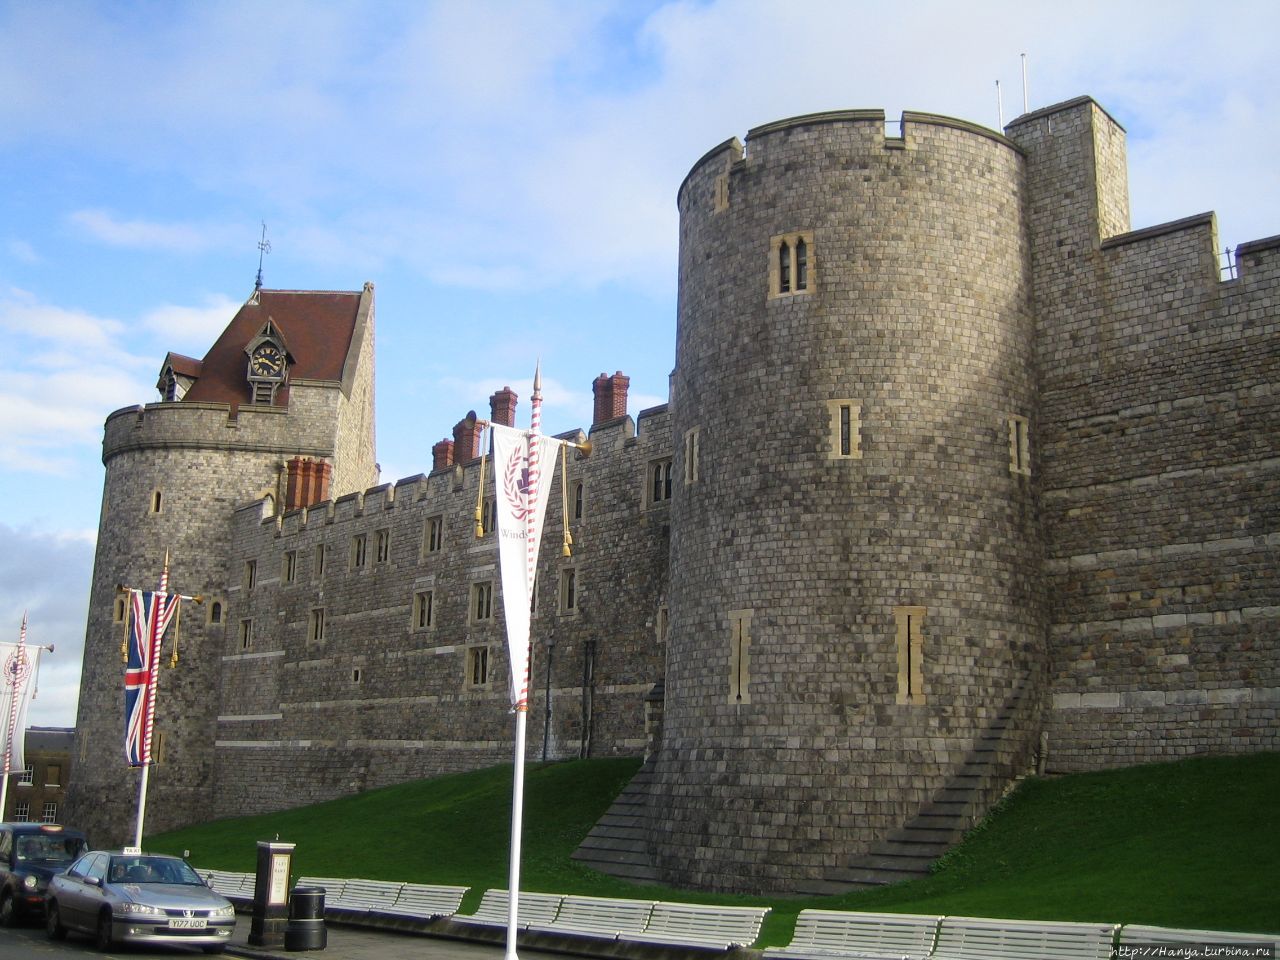 Виндзорский замок Виндзор, Великобритания